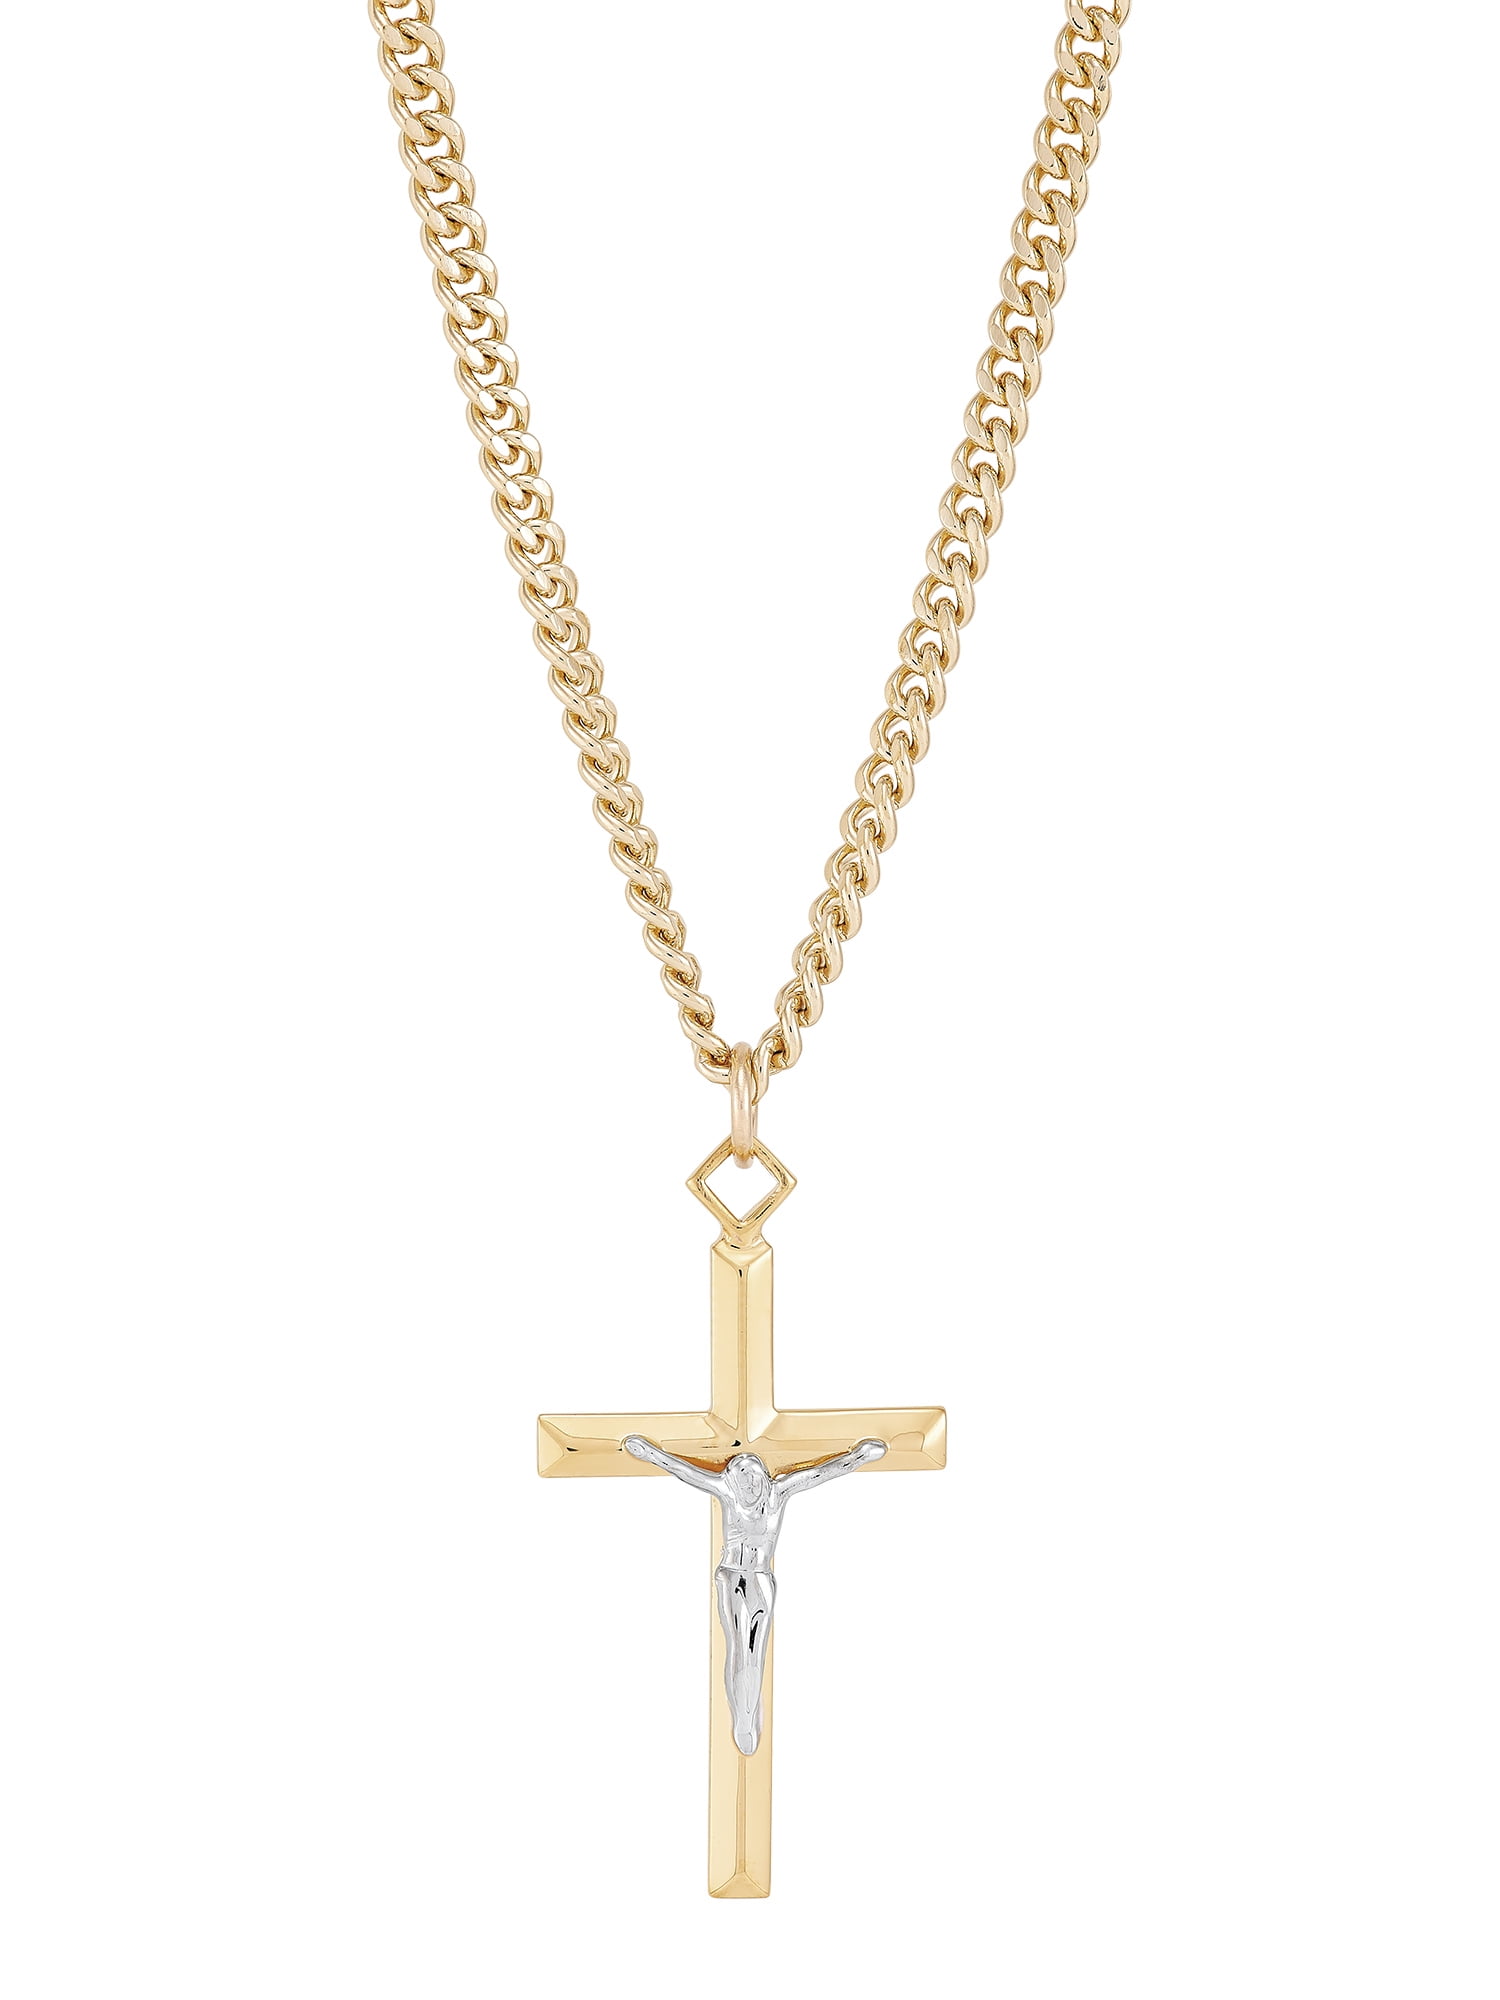 Unisex Men's Women's Stainless Steel Necklace Gold Tone Cross Pendant Hollow 8S 